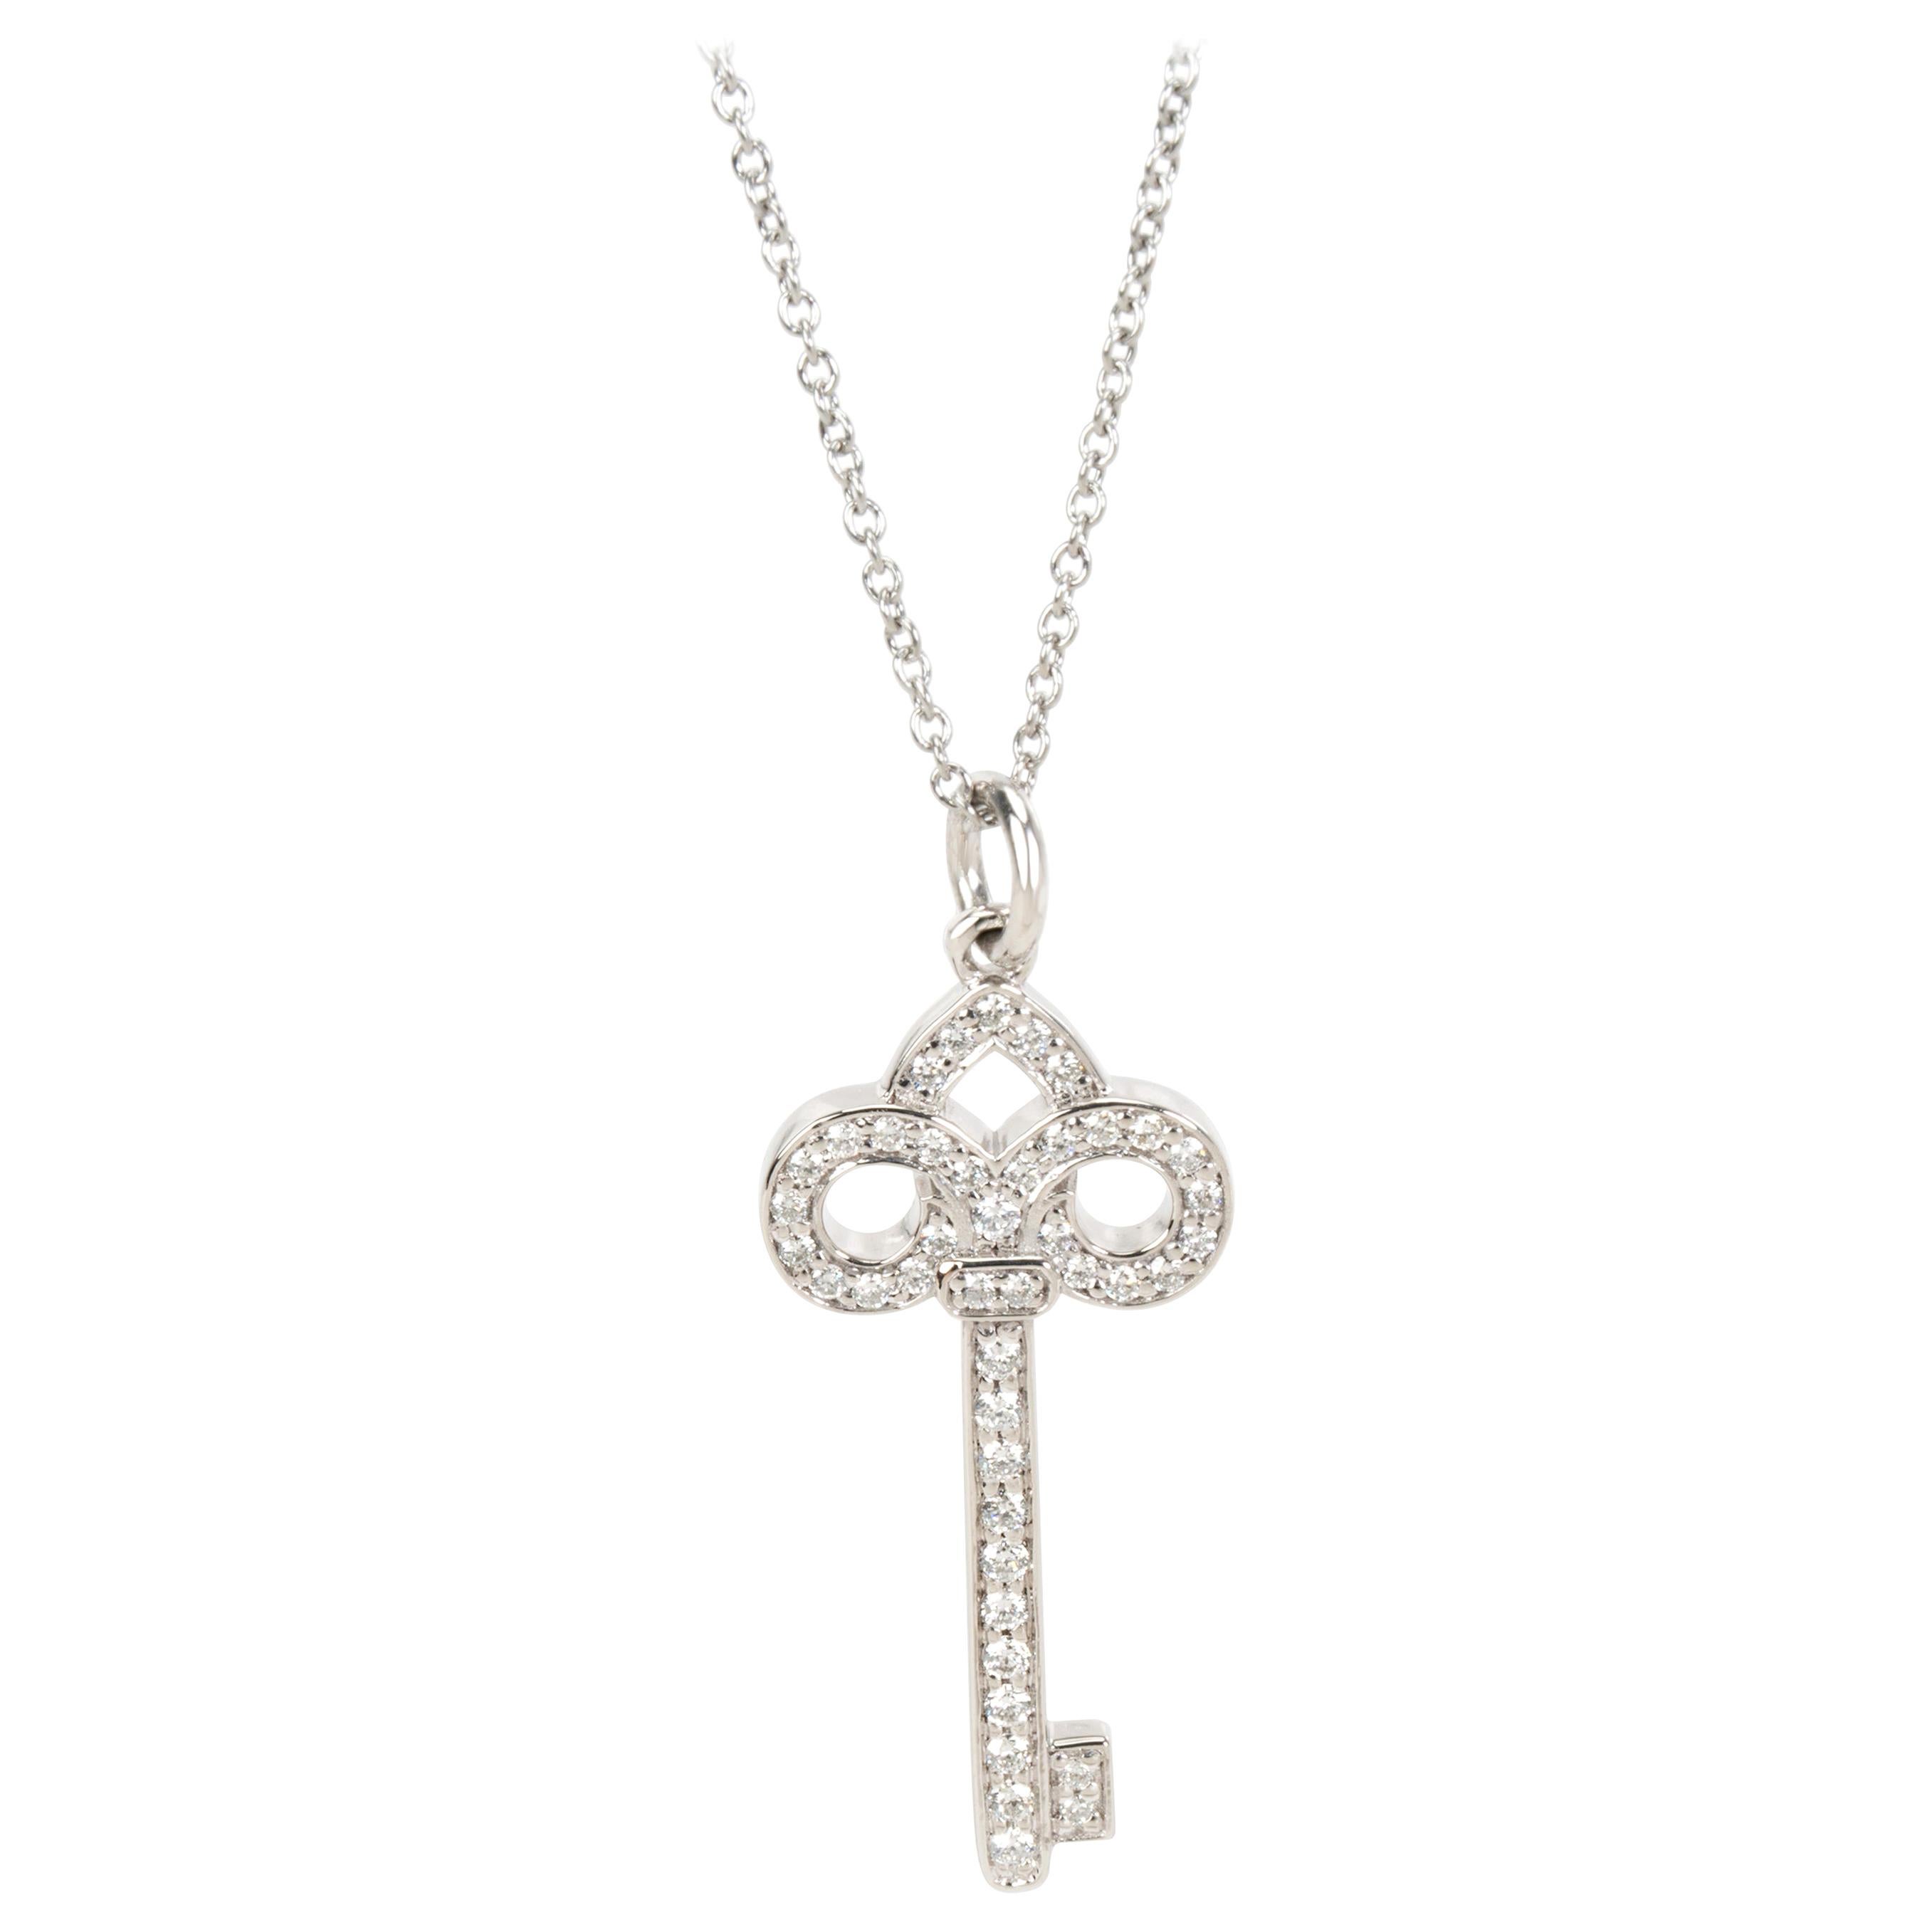 Tiffany & Co. Fleur-De-Lis Diamond Key Pendant Necklace in Platinum 0.12 Carat